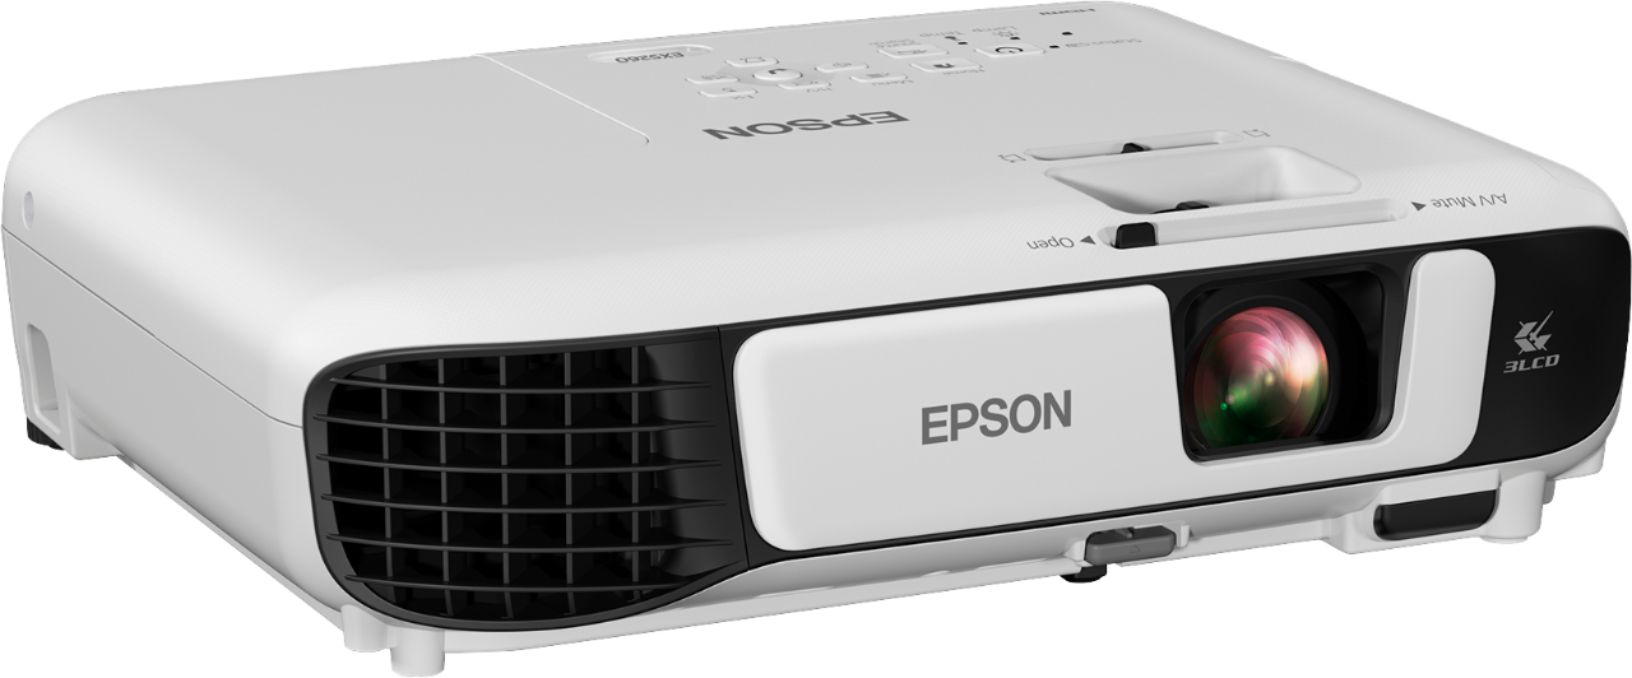 Angle View: Epson - EX5260 XGA Wireless 3LCD Projector - Black/white